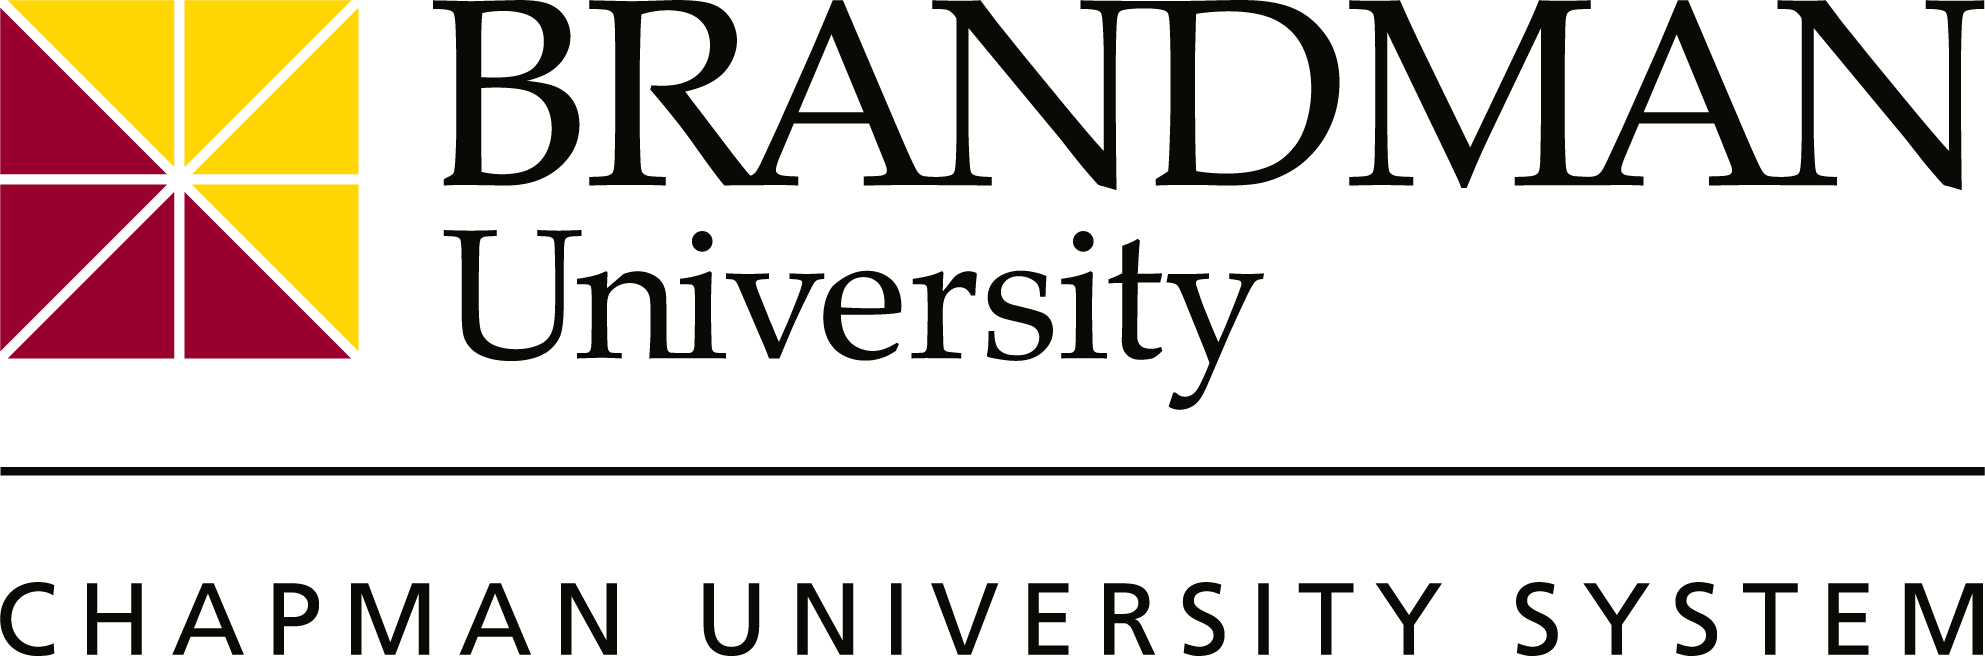 Brandman logo